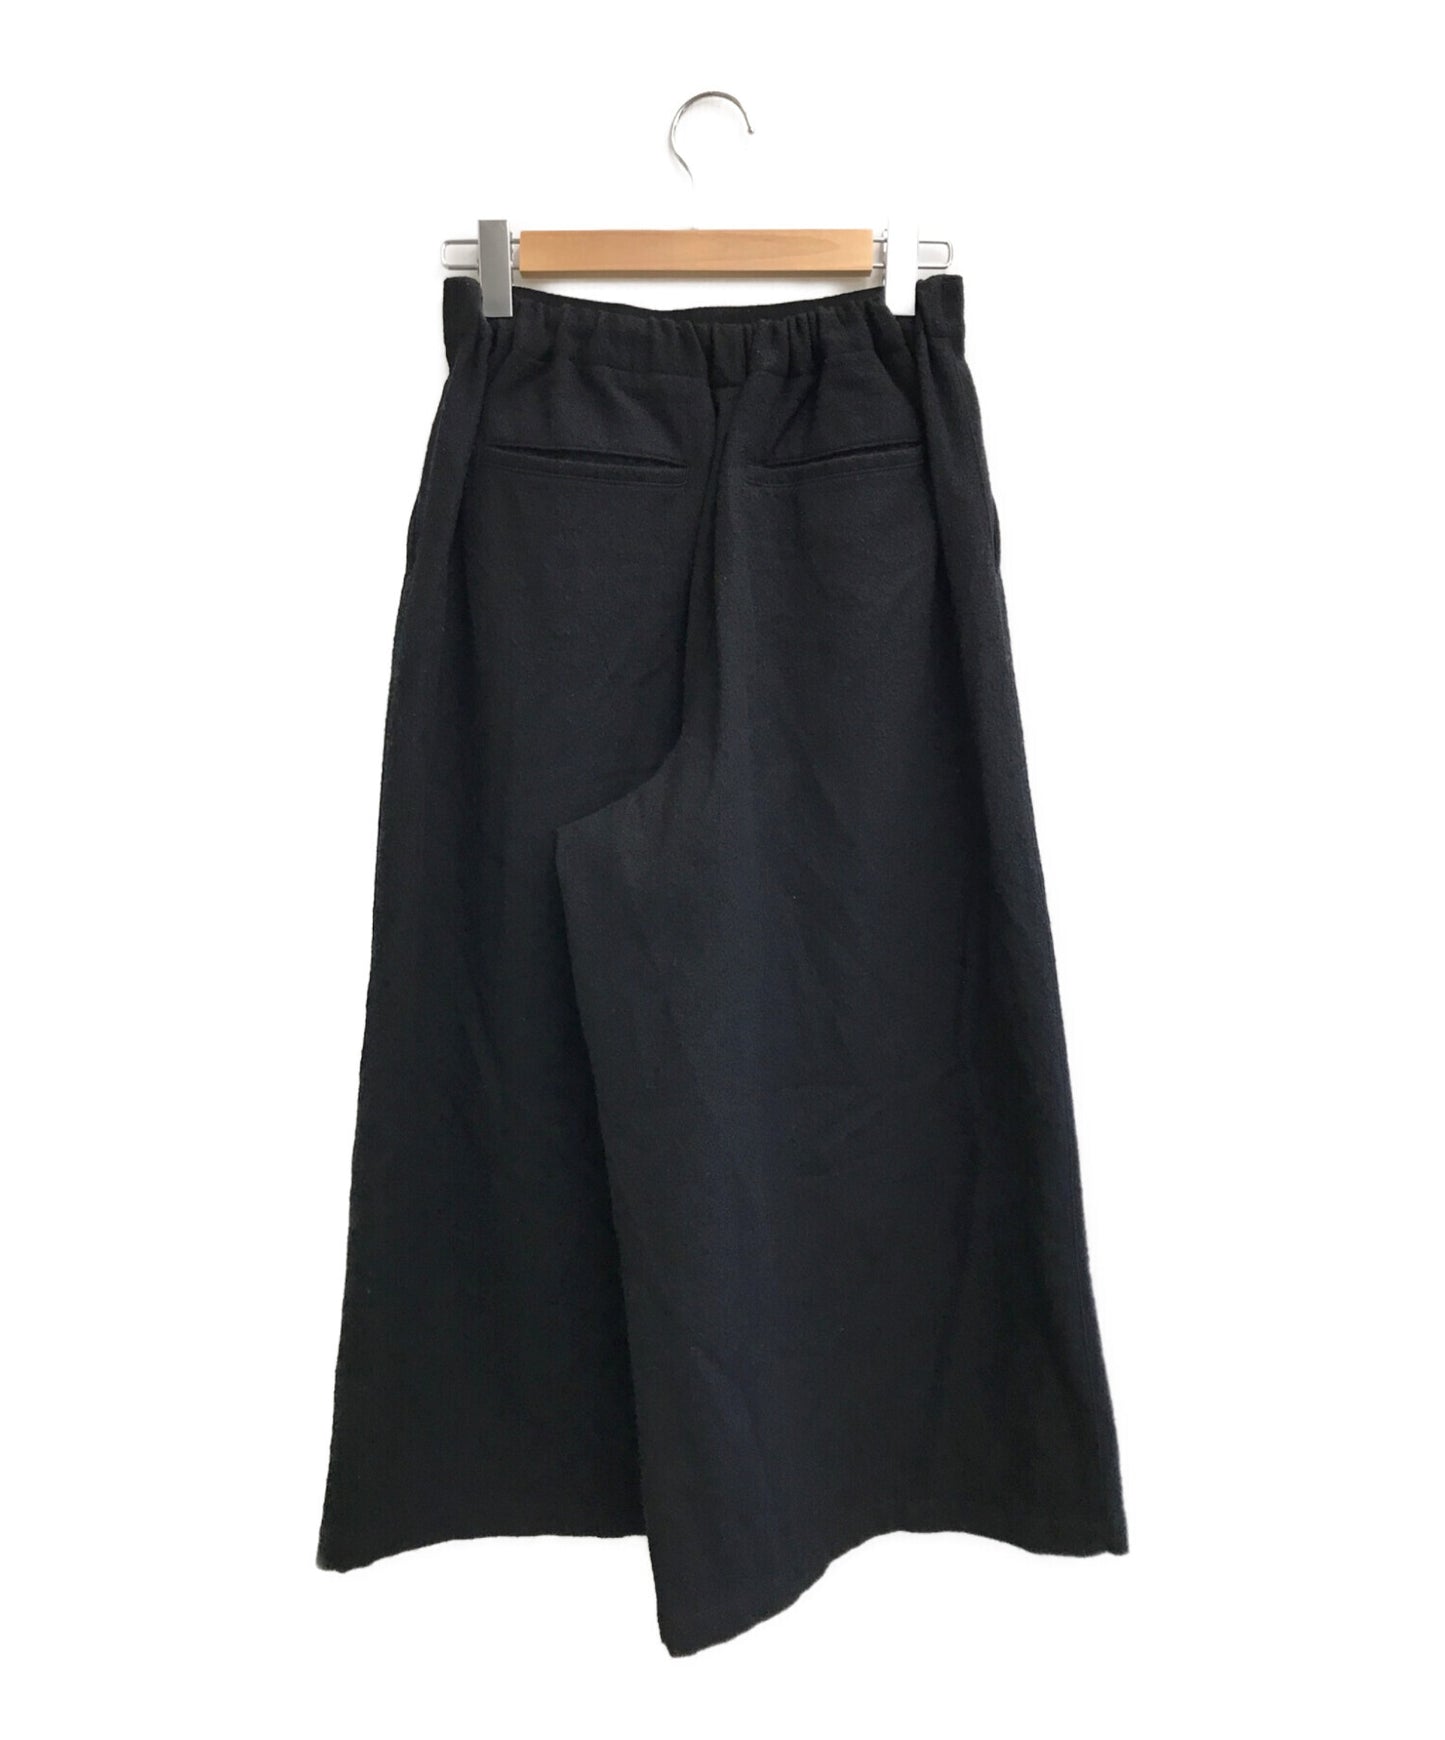 Tricot Comme des garcons กางเกงผ้าขนสัตว์กว้าง / กางเกงผ้าขนสัตว์ / กางเกงกว้าง / กางเกง / กางเกงเงาเหนือกางเกง / กางเกงทรงหลวมกว้าง TD-P015